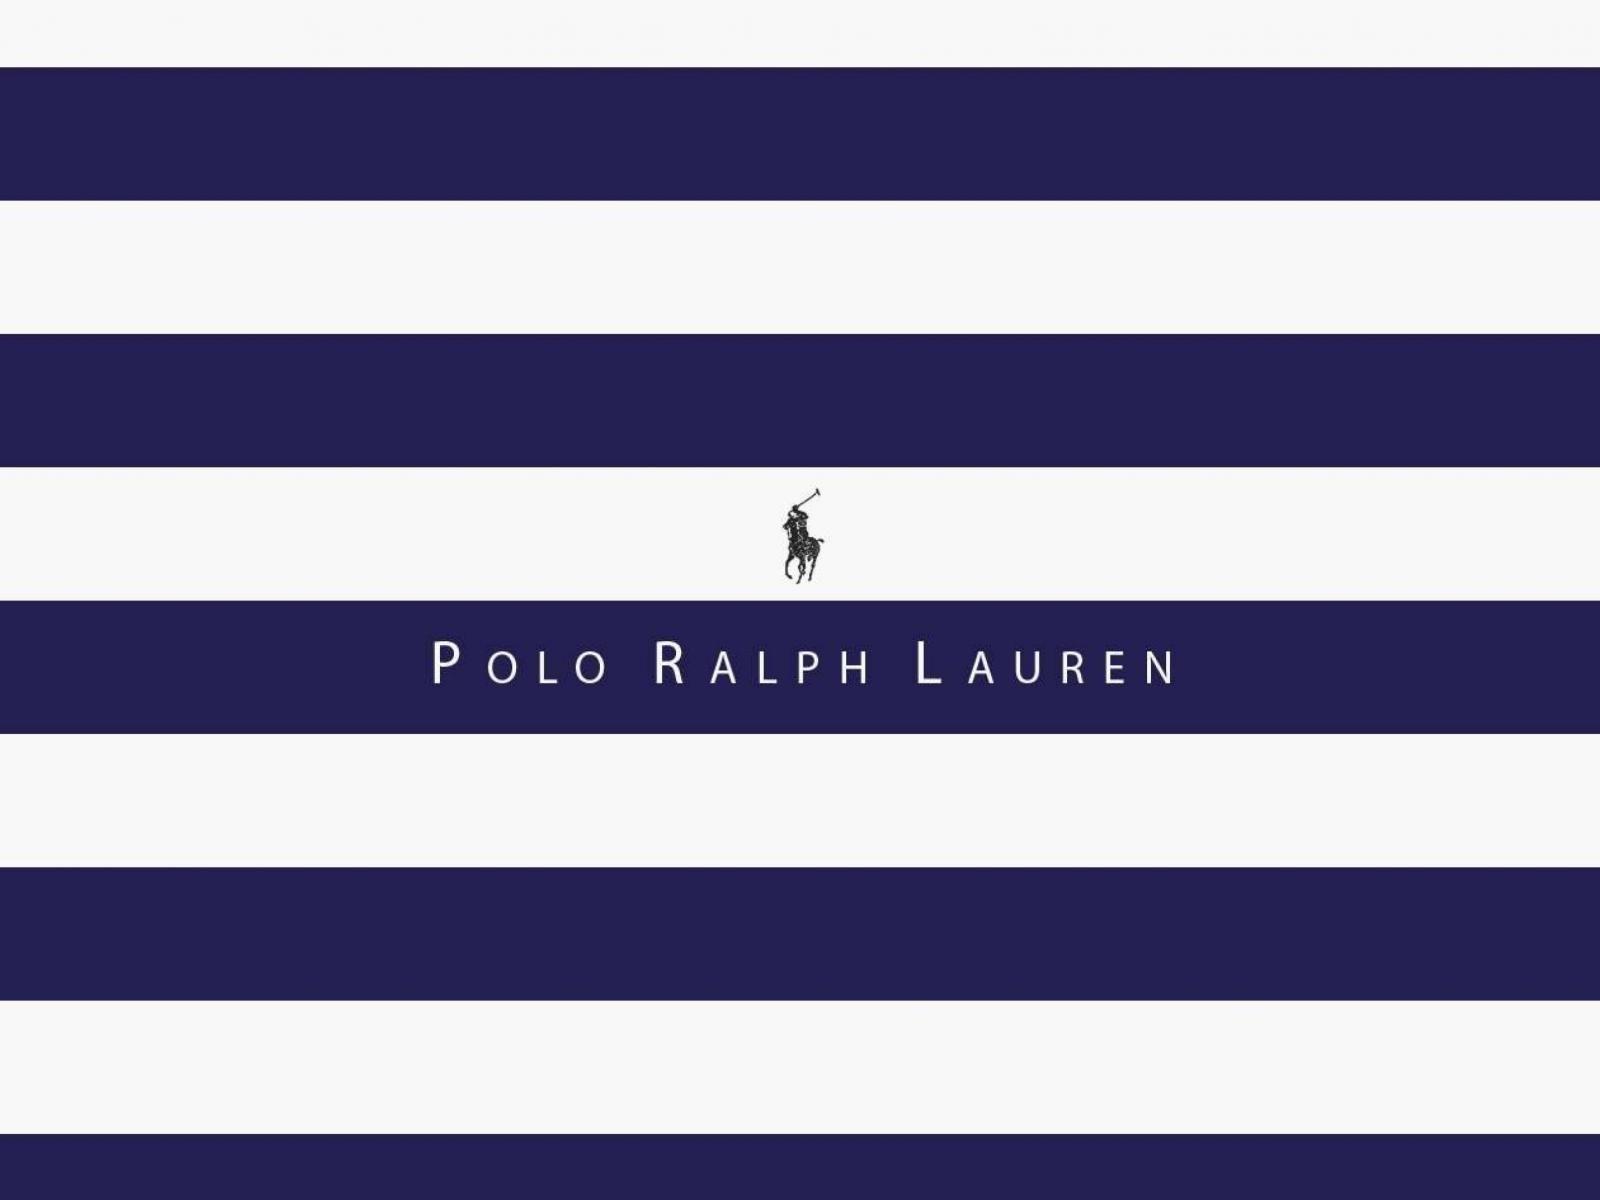 Polo Ralph Lauren Wallpapers - Wallpaper Cave